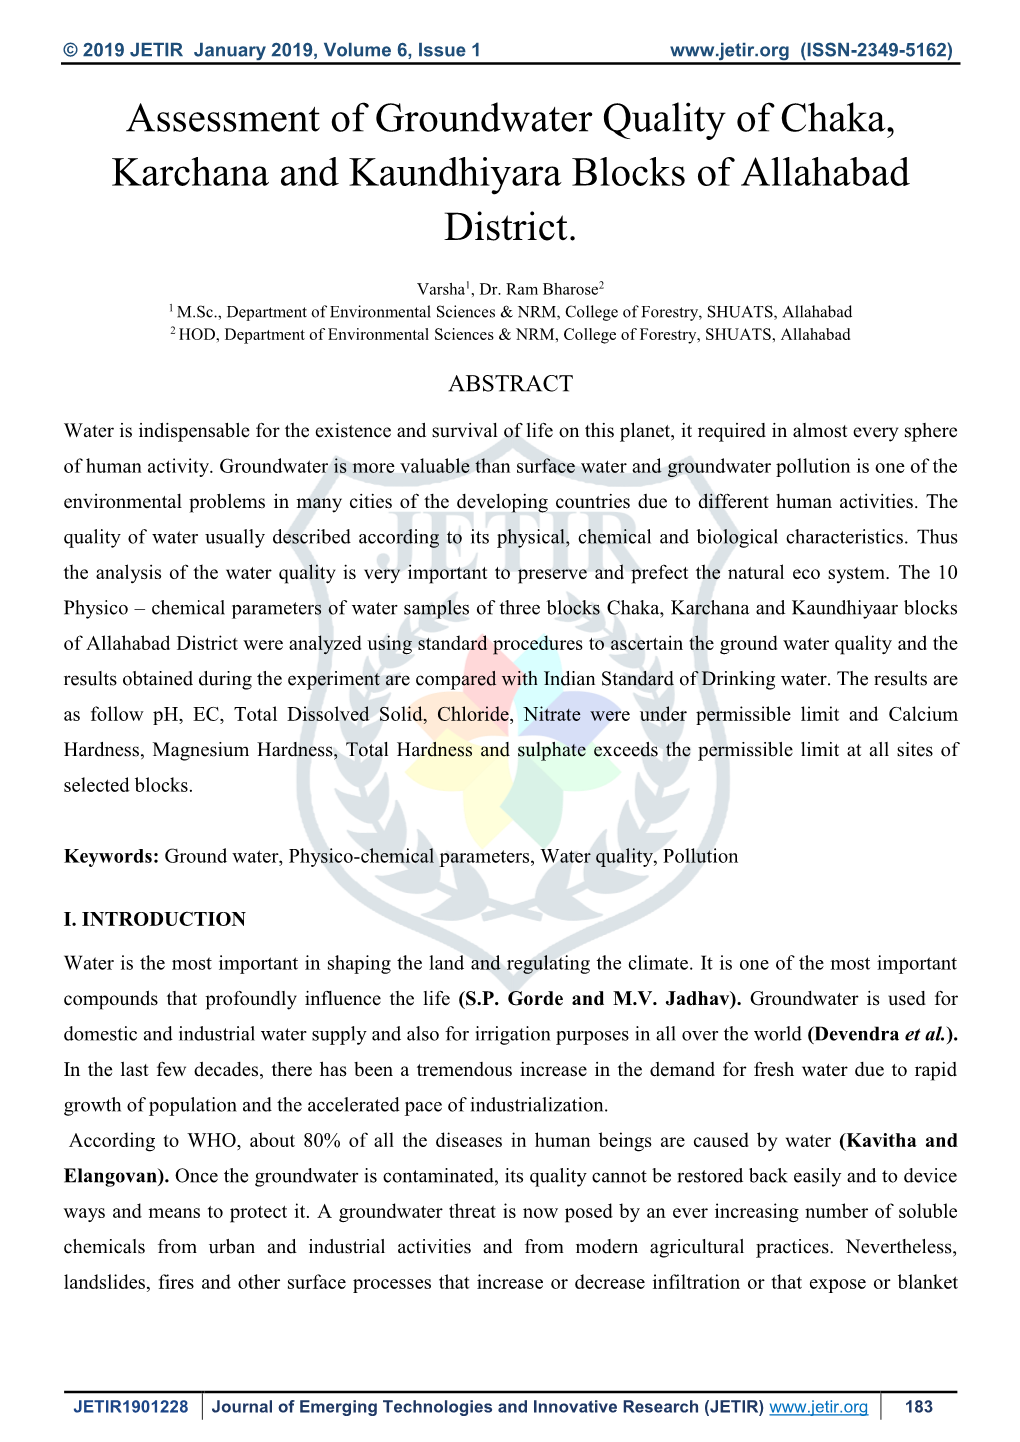 Assessment of Groundwater Quality of Chaka, Karchana and Kaundhiyara Blocks of Allahabad District